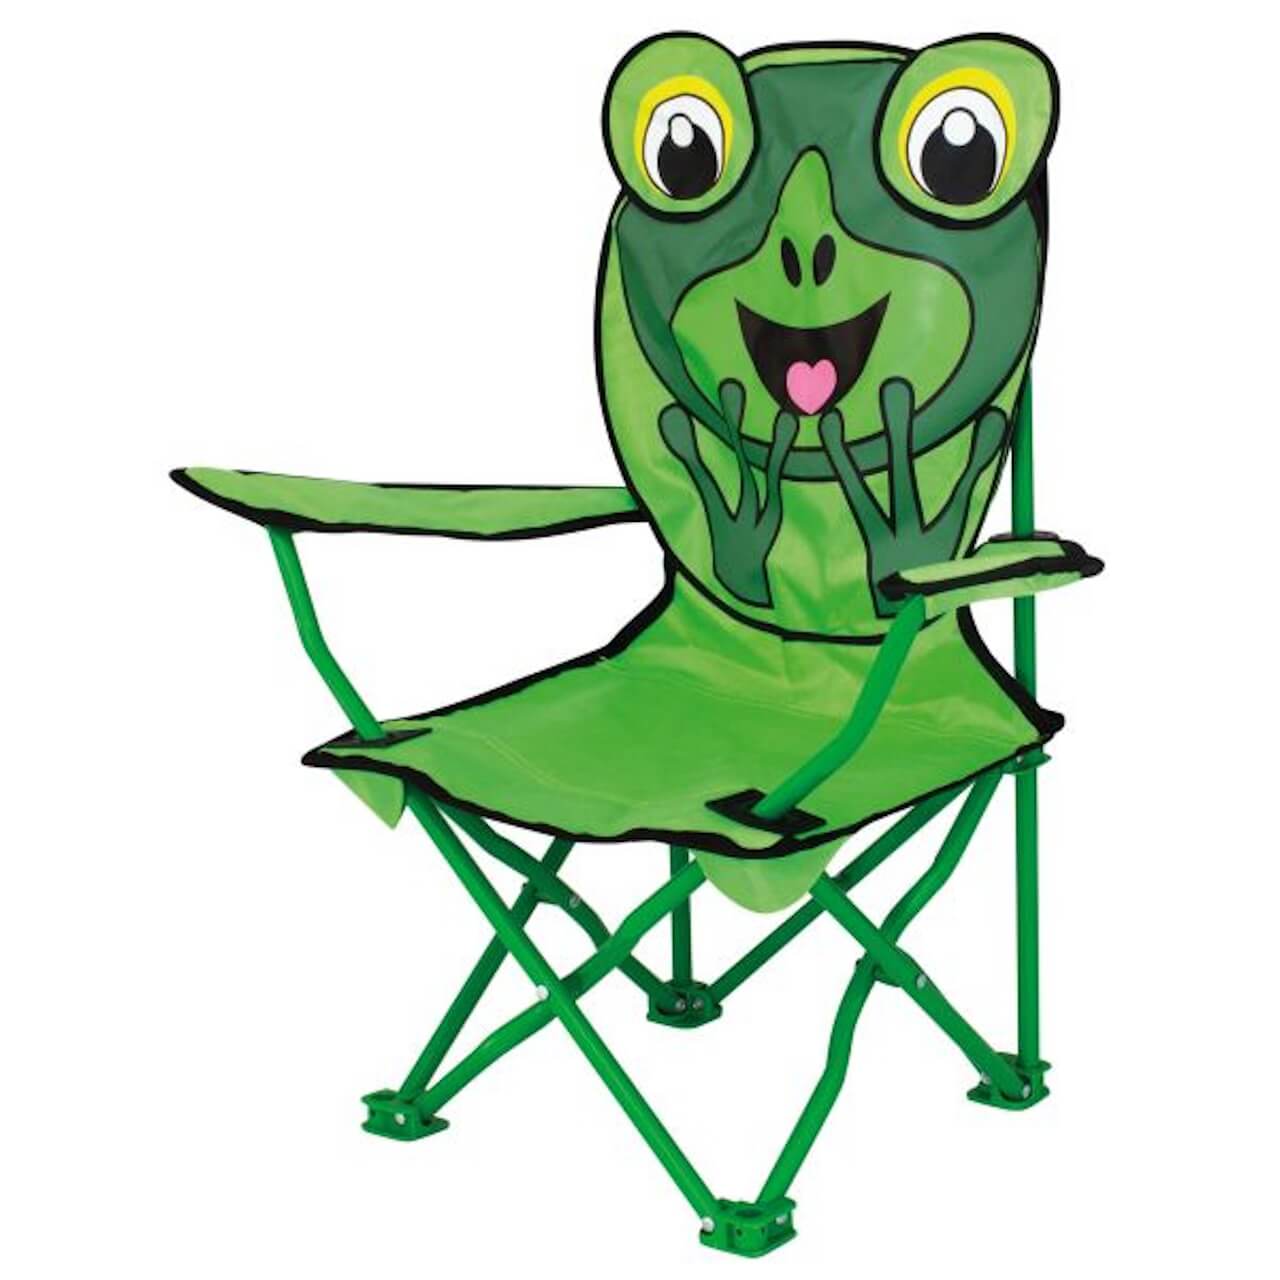 Kinder-Faltstuhl Frosch, grün